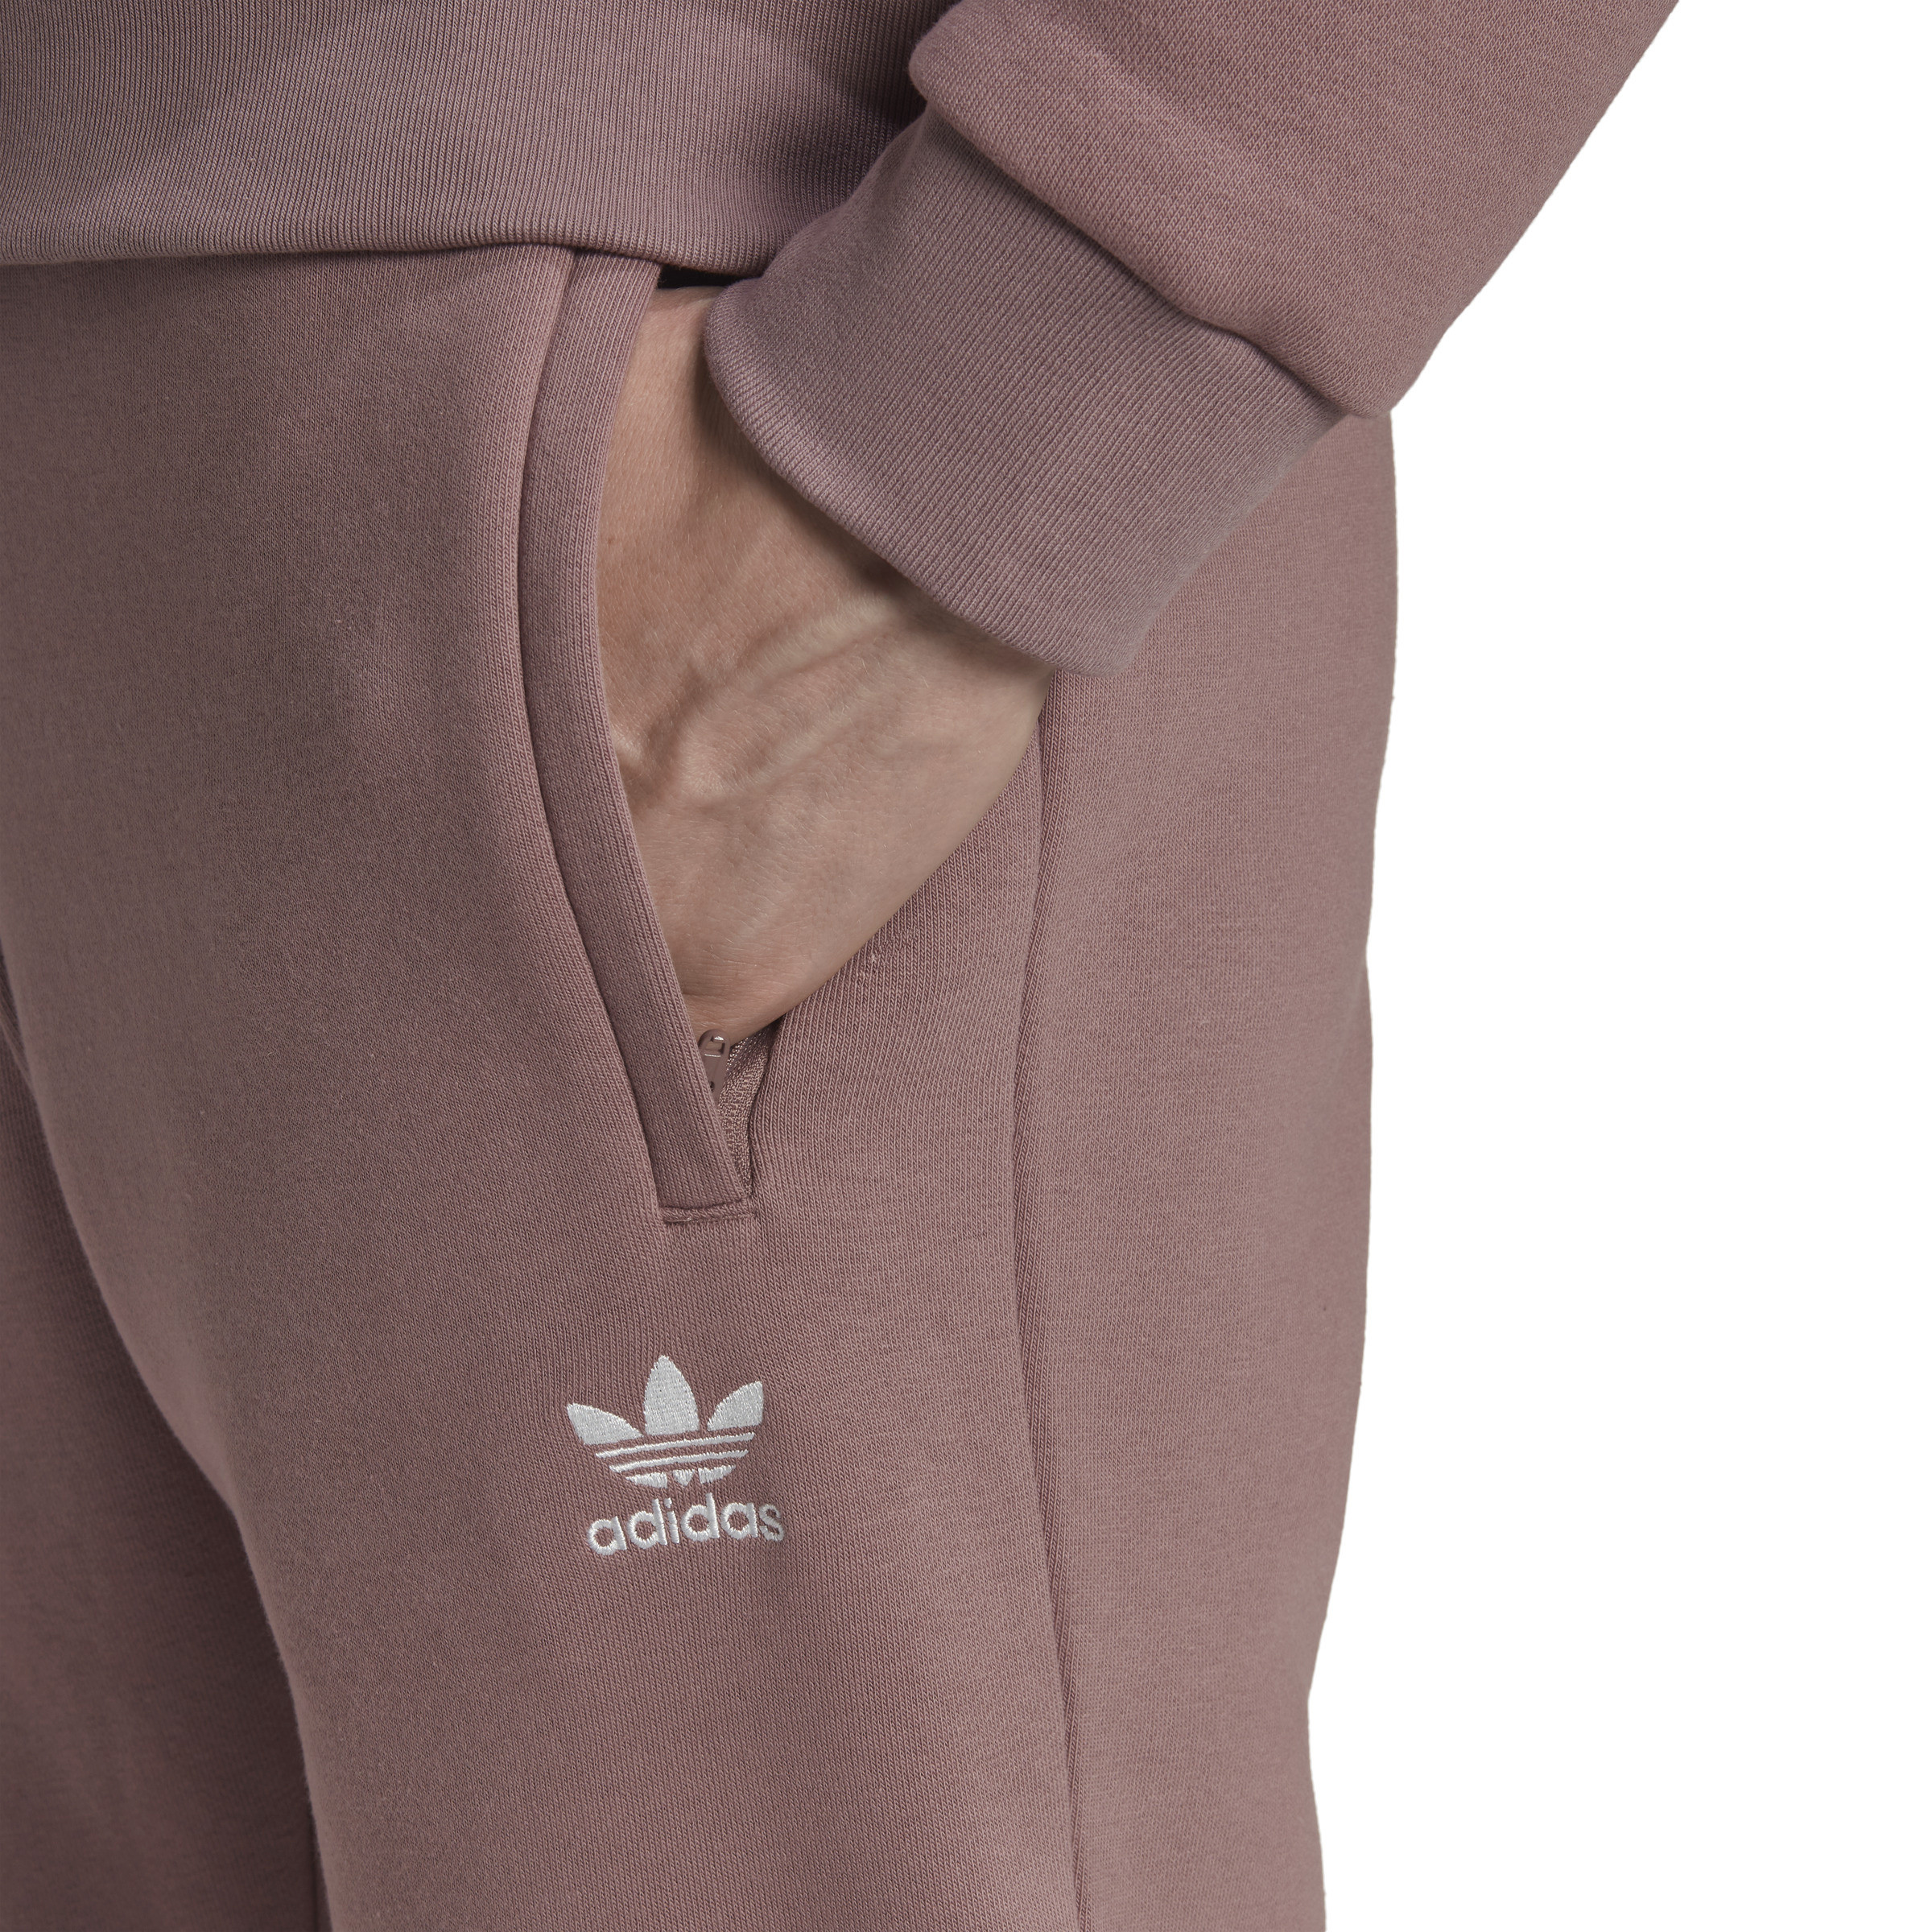 Adidas - Adicolor Essentials Trefoil Pants, Antique Pink, large image number 4